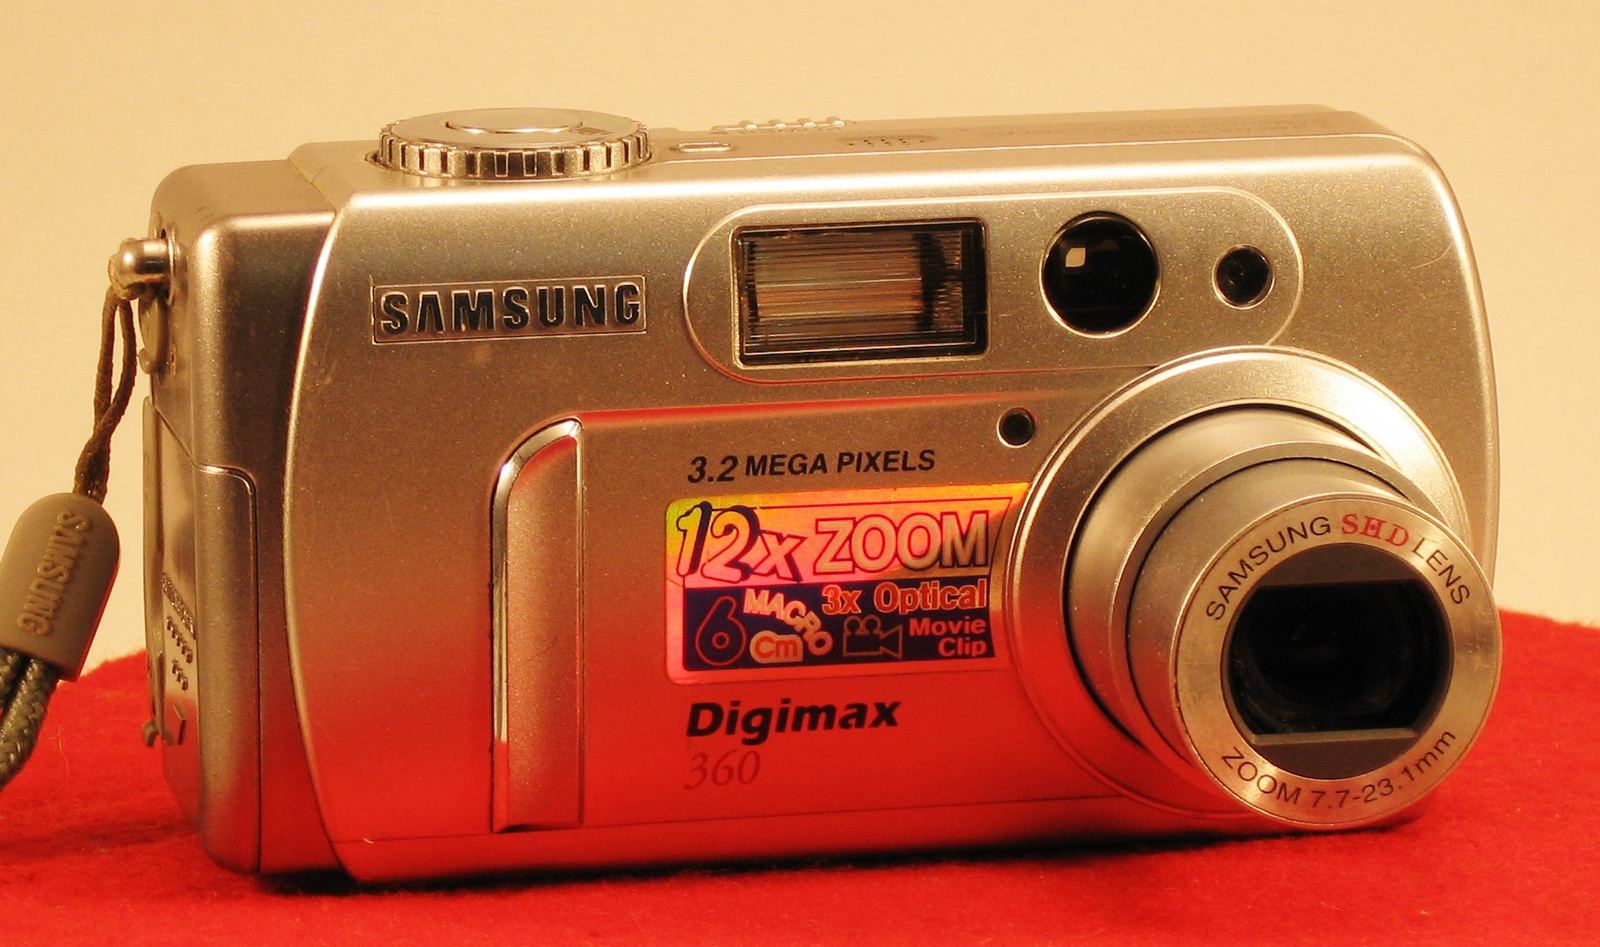 Samsung Digimax 360